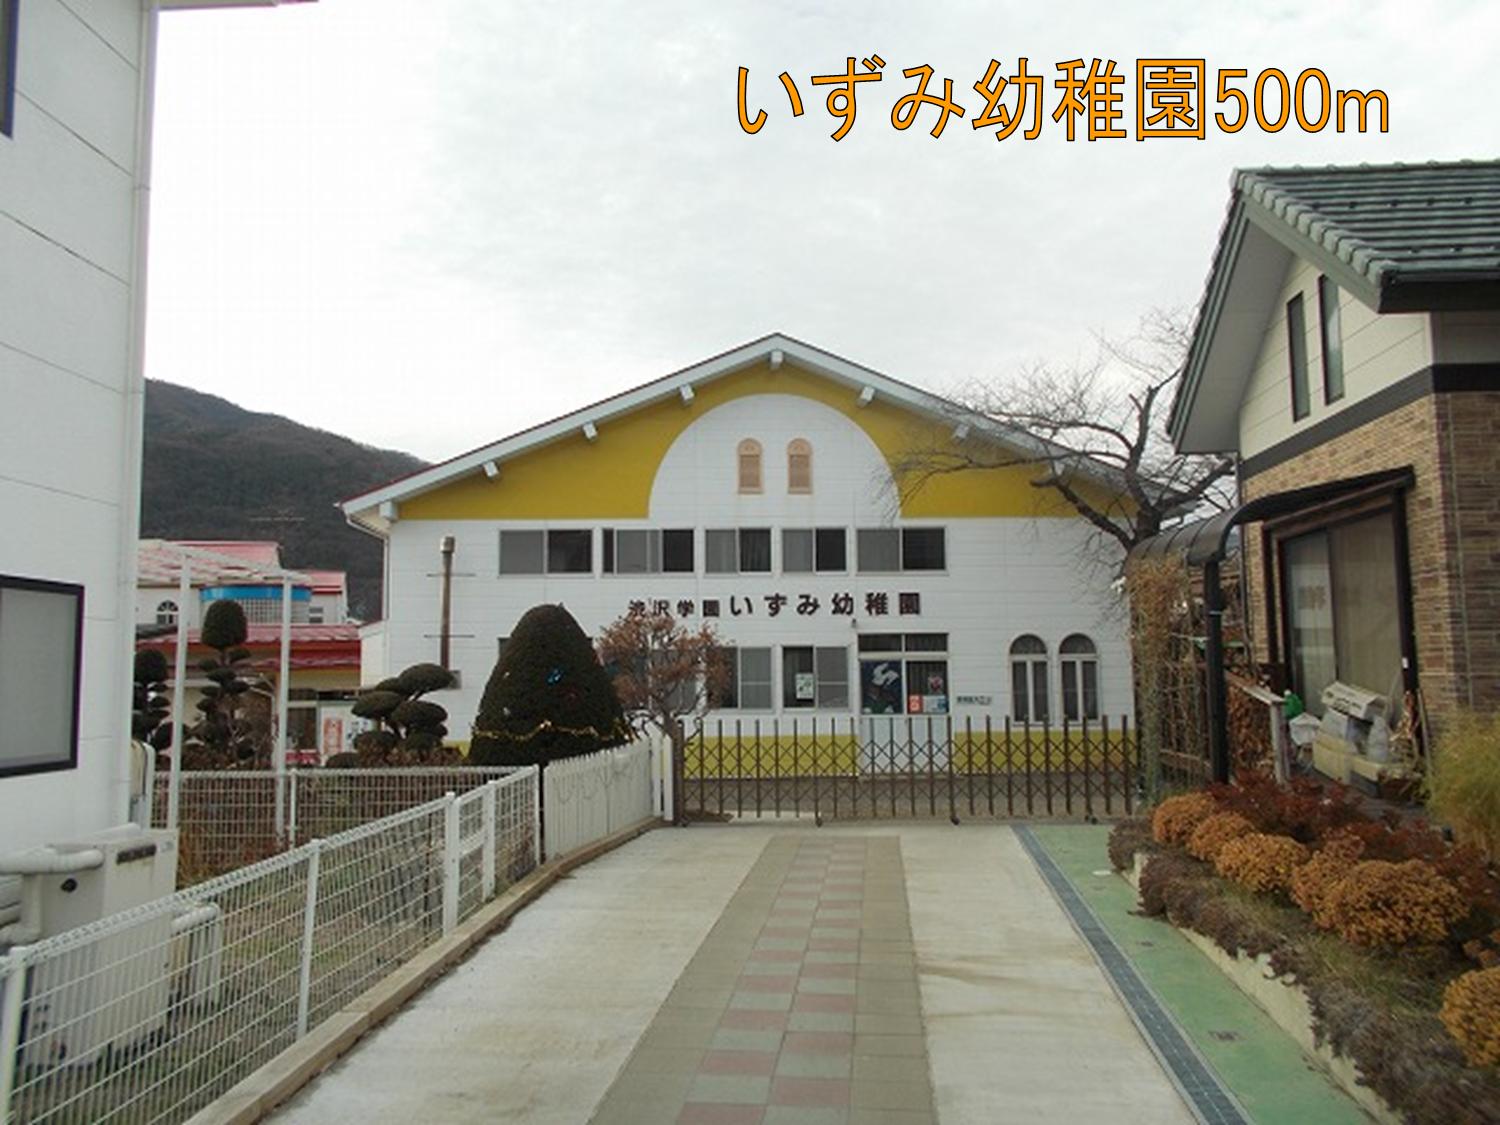 kindergarten ・ Nursery. Izumi kindergarten (kindergarten ・ To nursery school) 500m